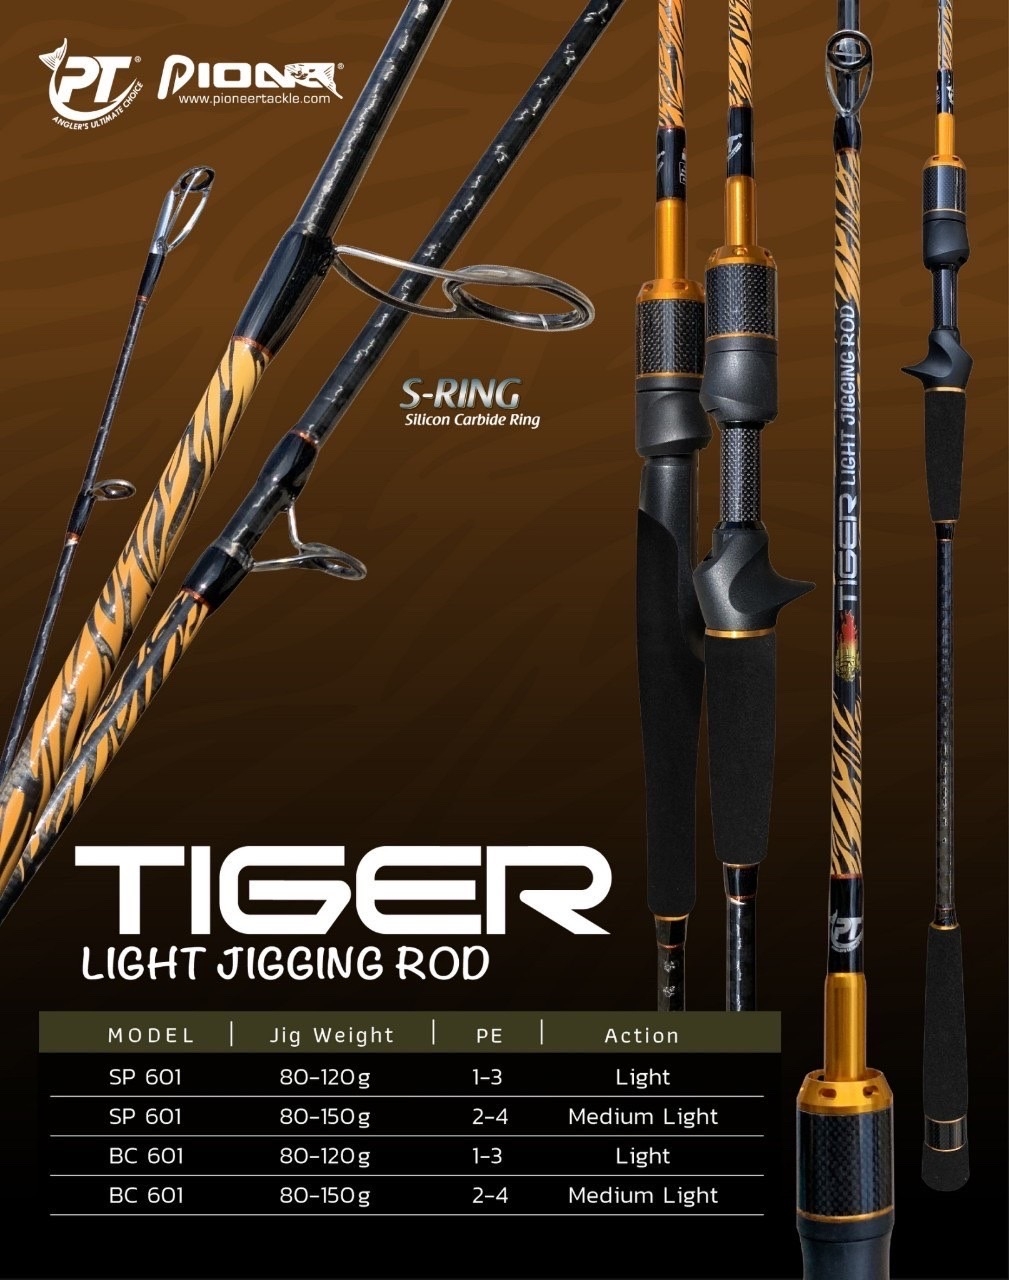 Pioneer Tiger Light Jigging Rod #BC-601 PE2-4 (Baitcasting) - 7